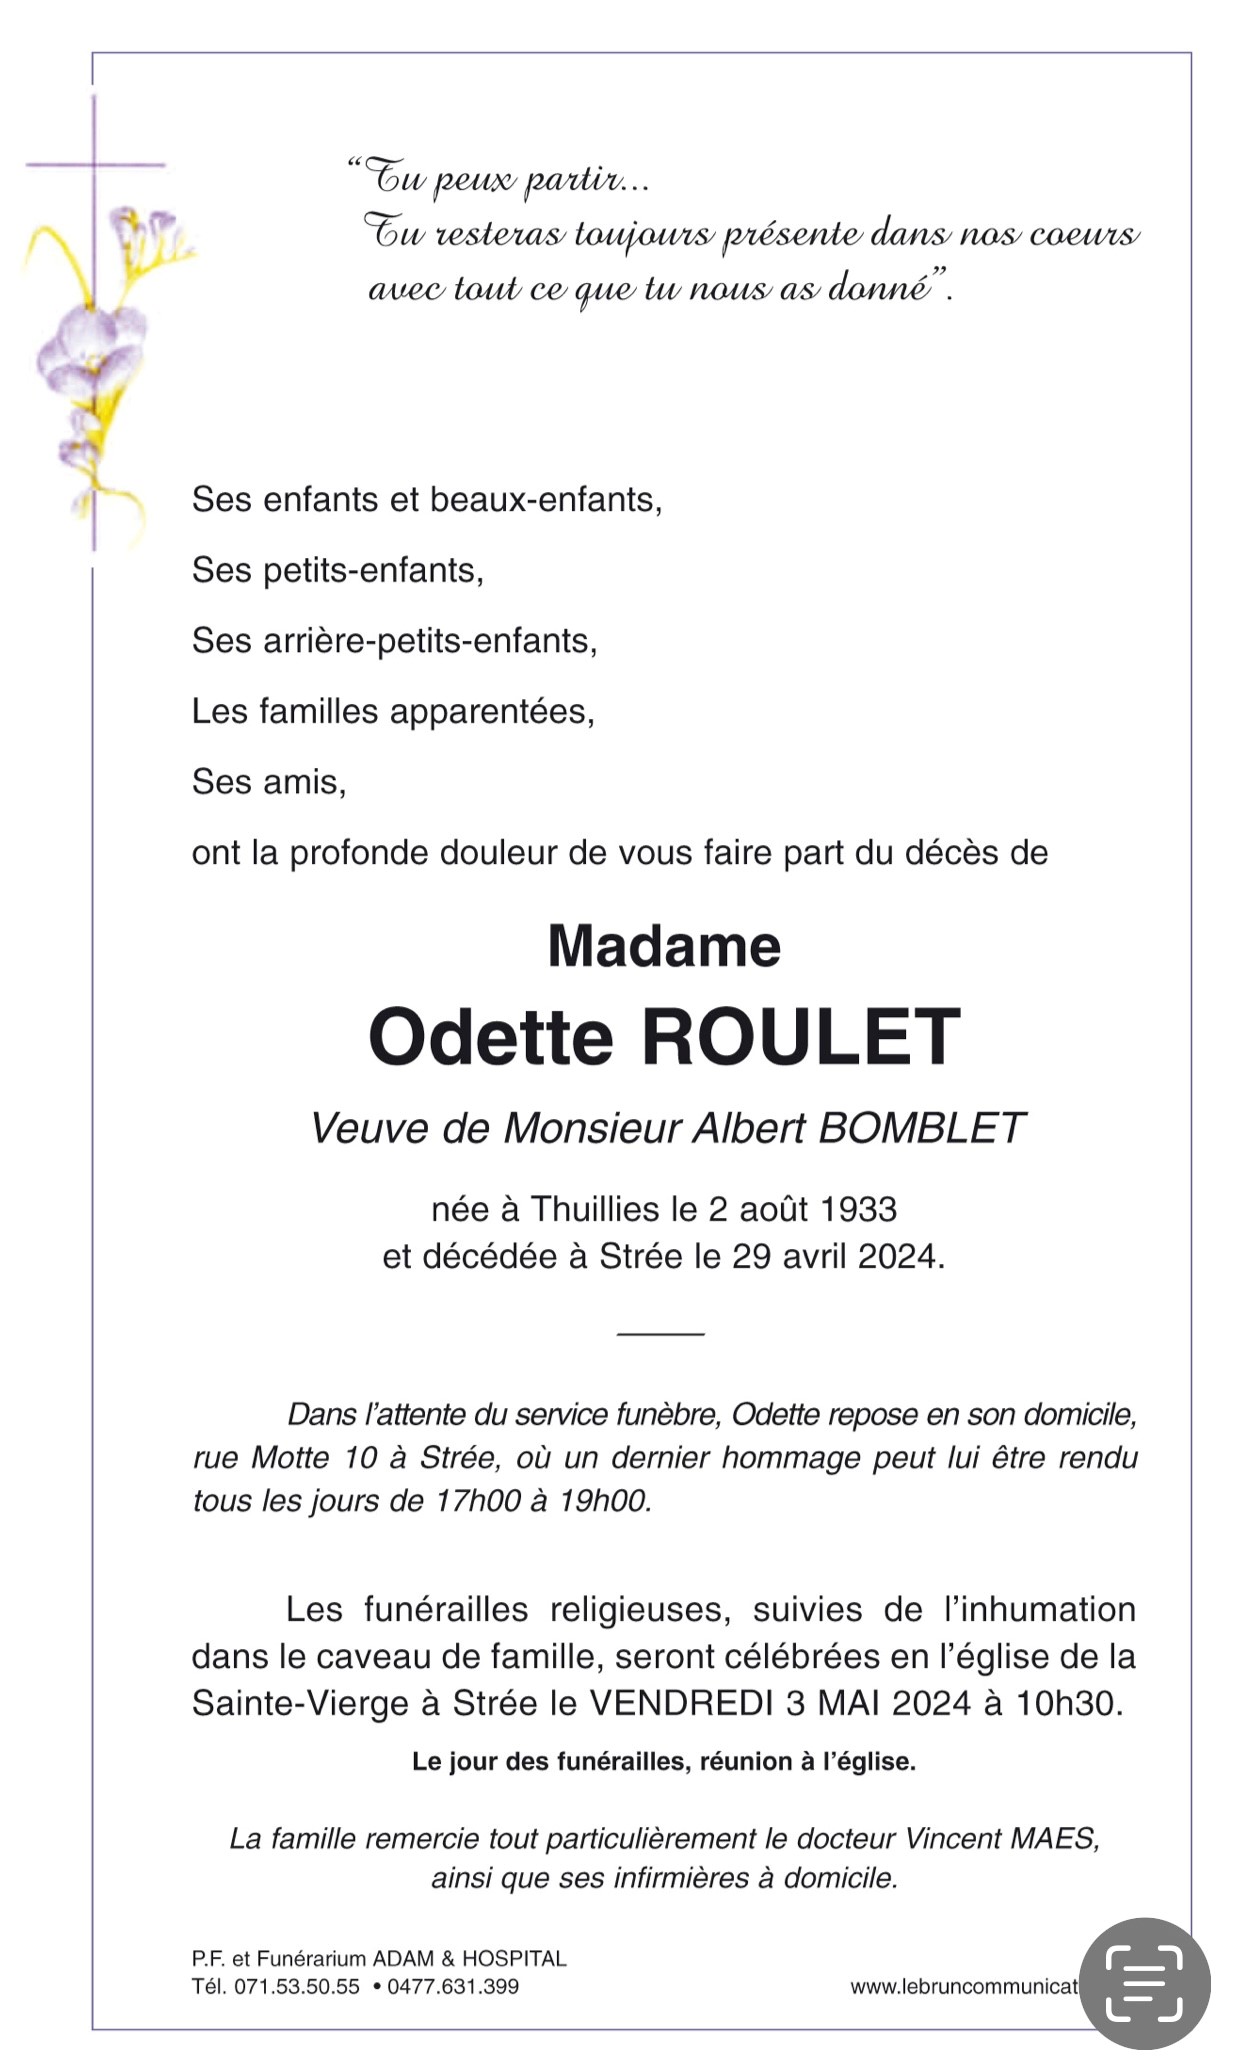 Odette ROULET | Funérailles Adam Hospital